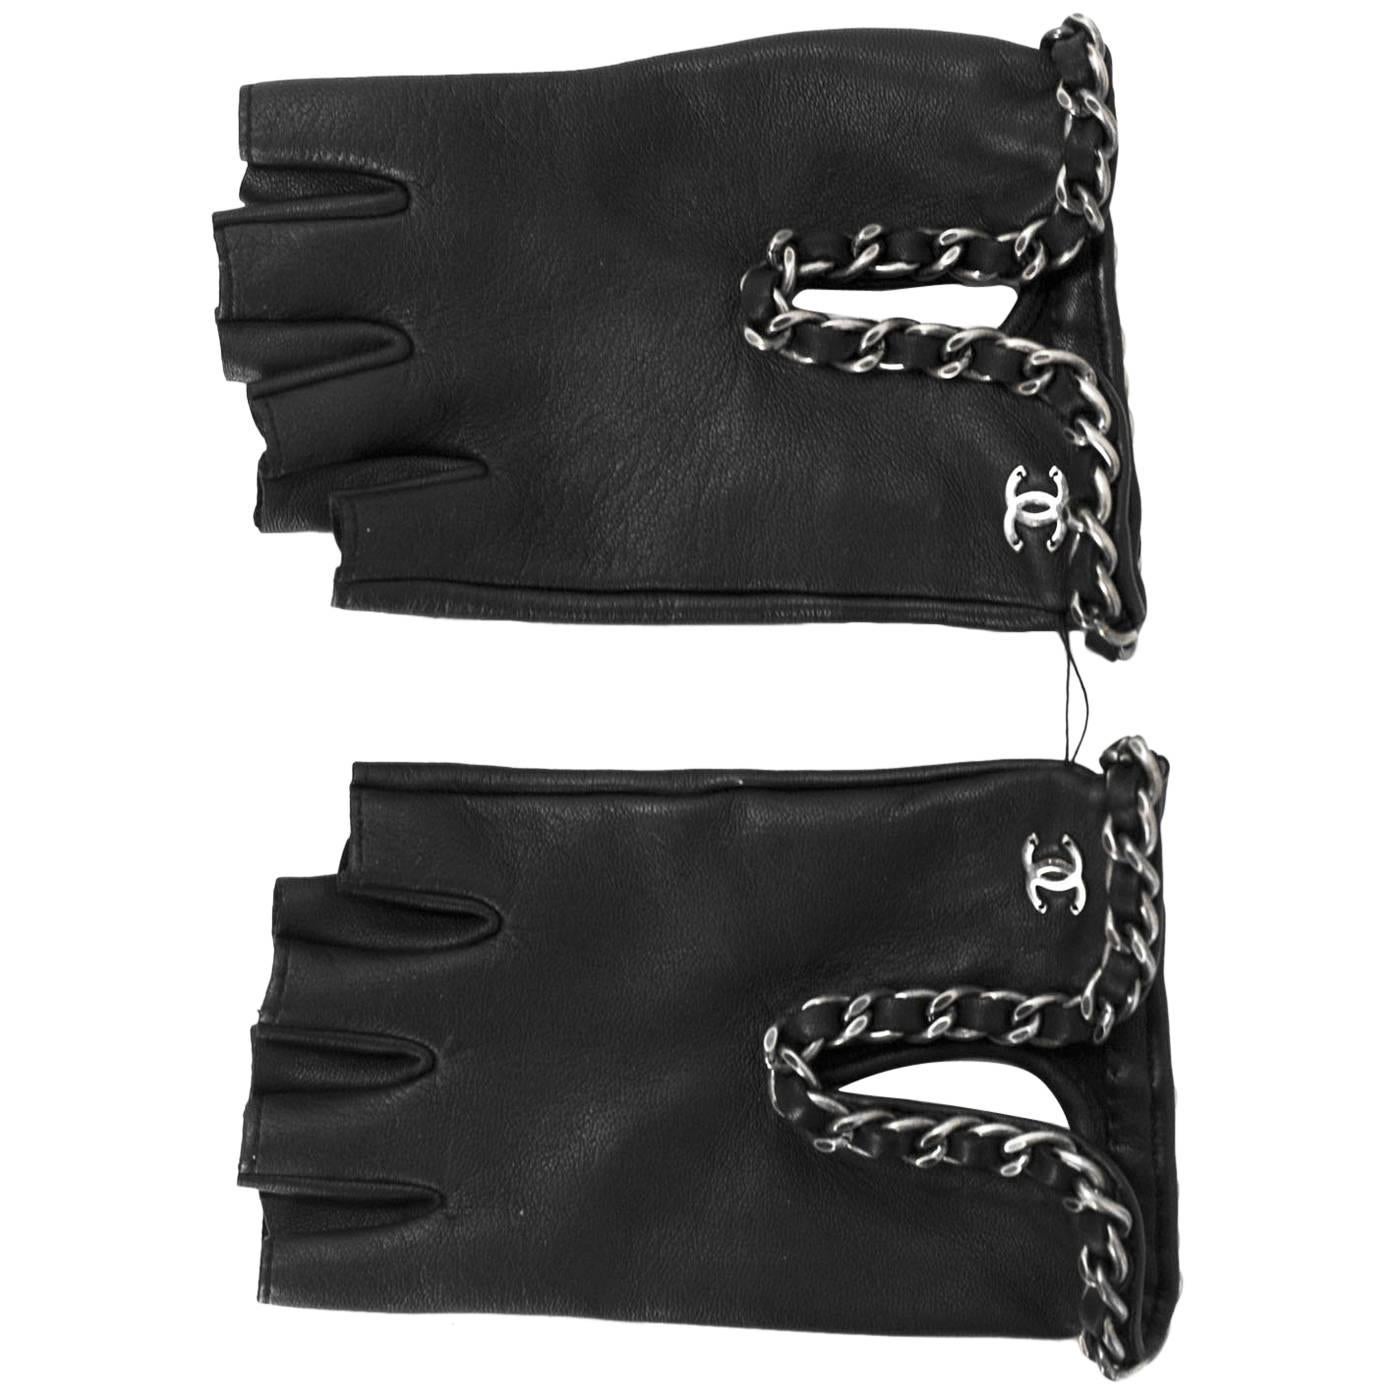 Chanel Black Leather Chain Around Finger-less Gloves Sz 7